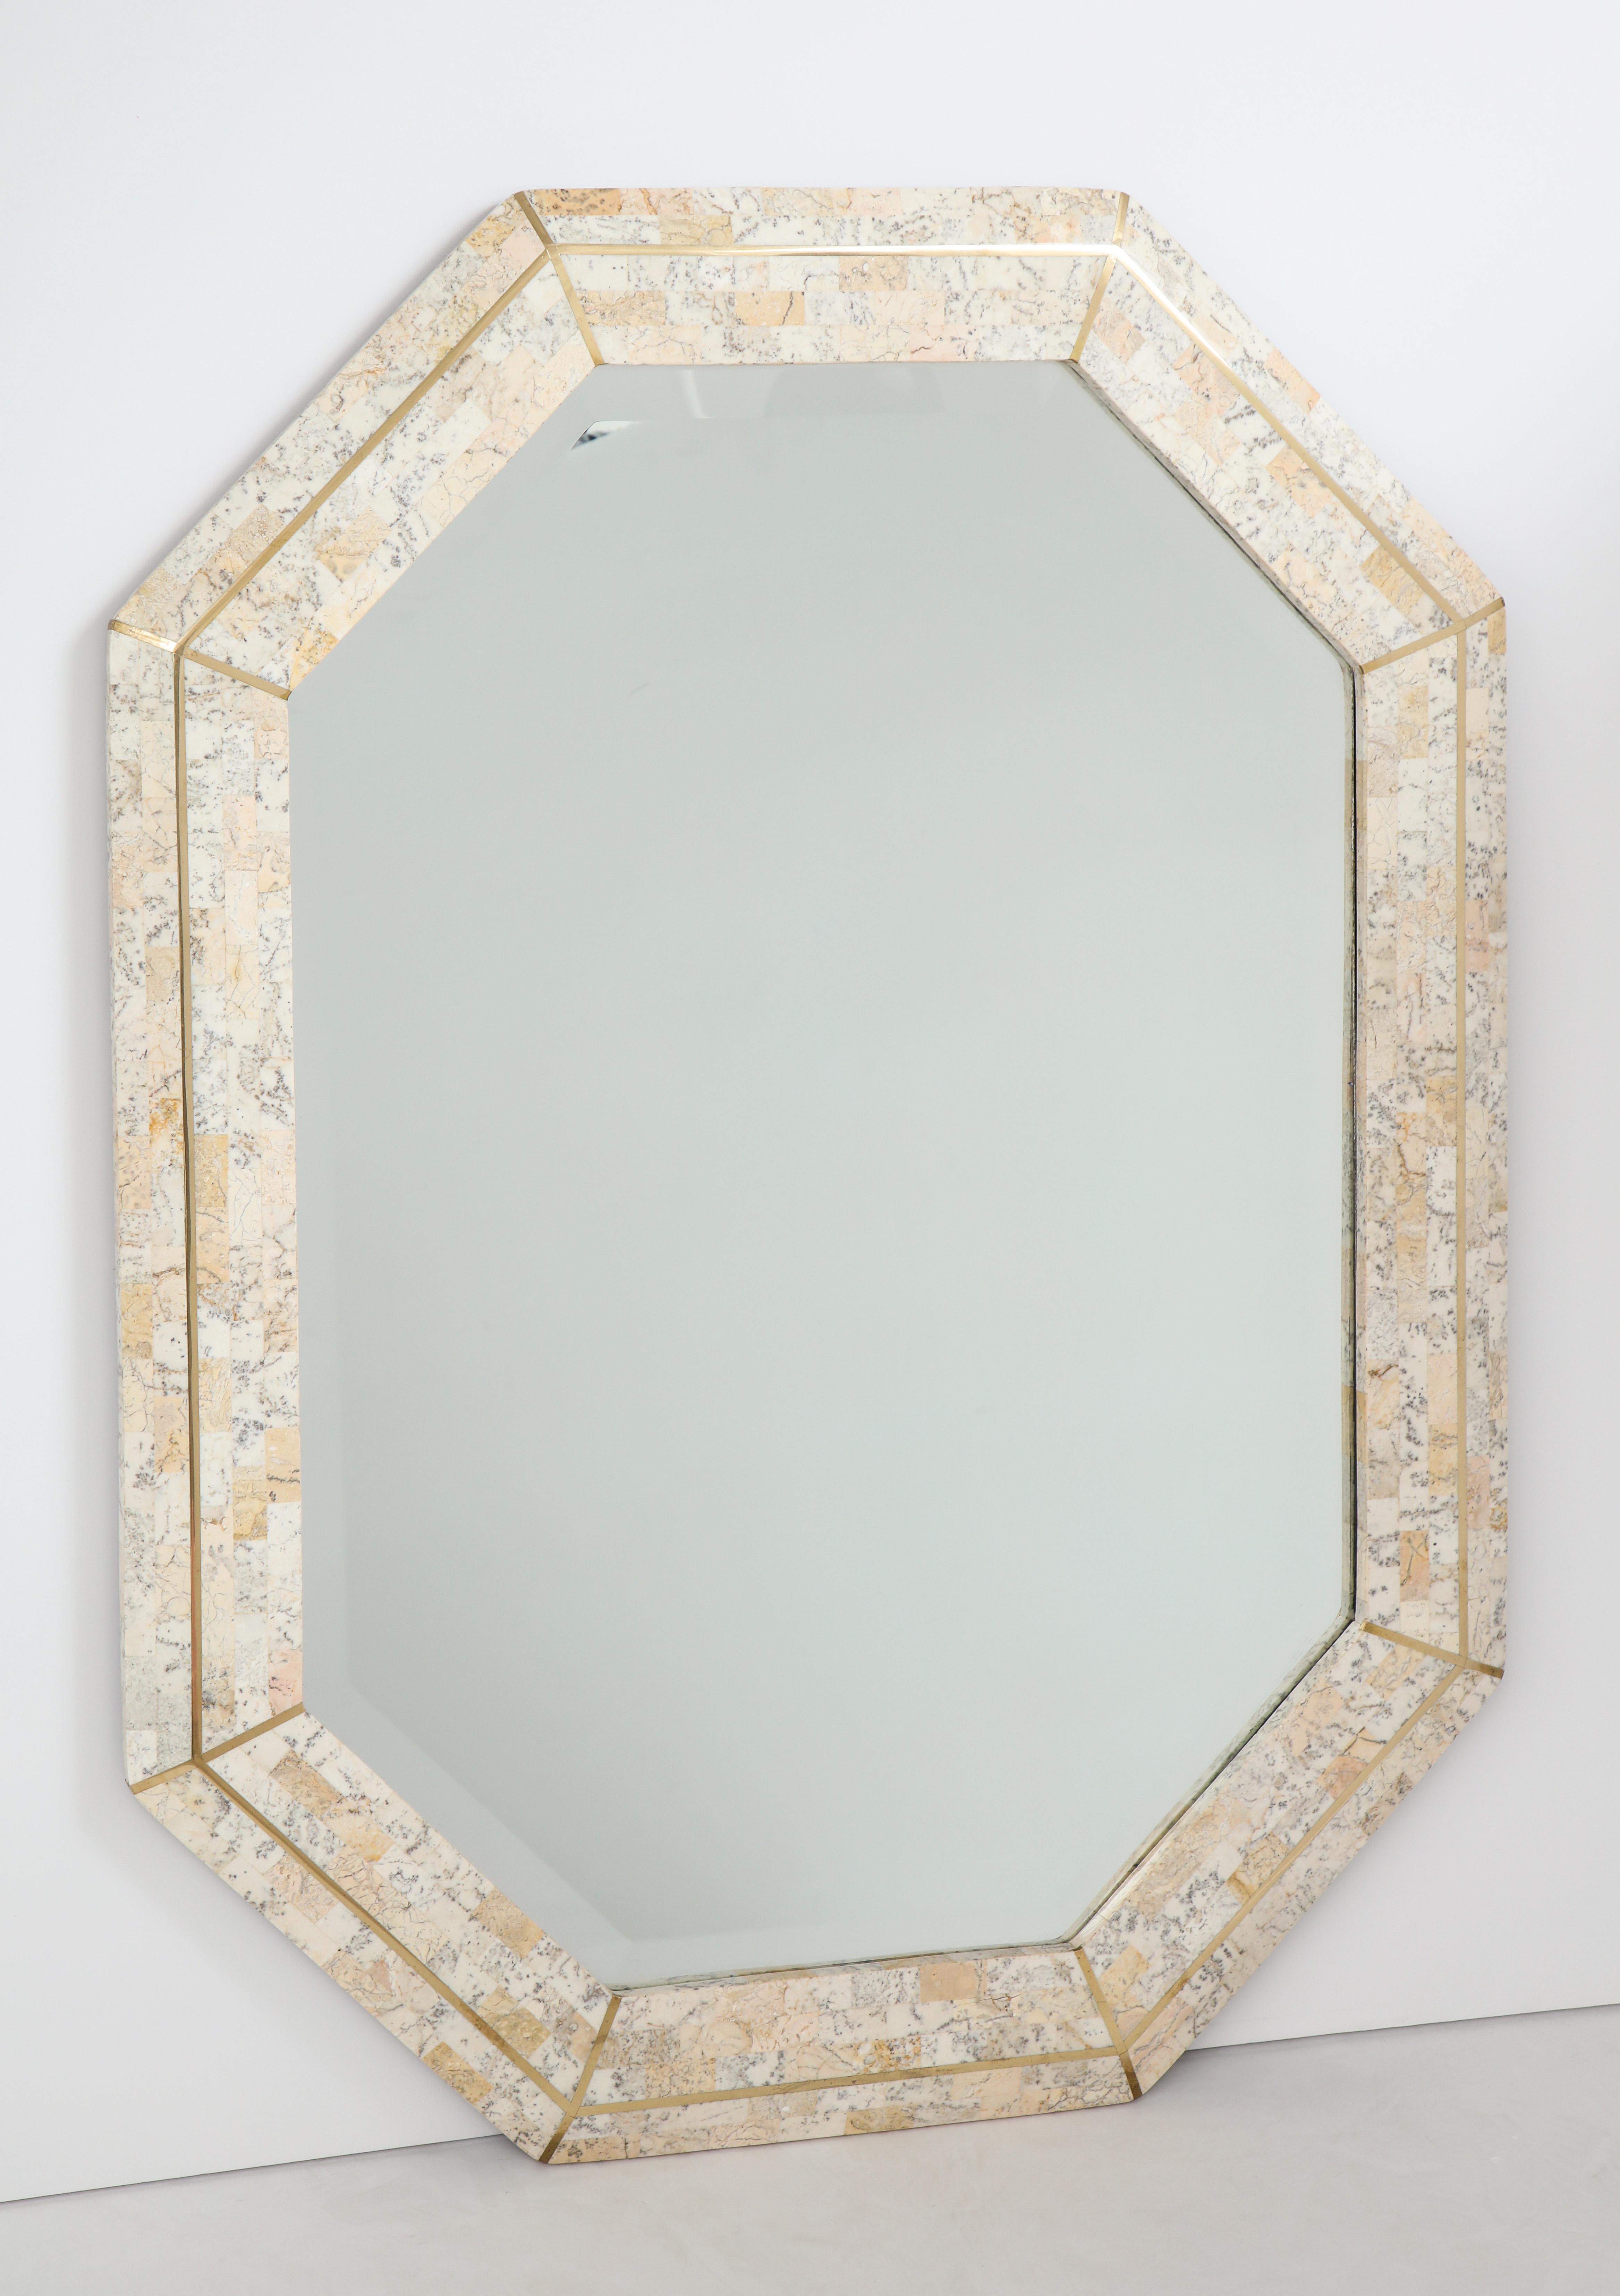 Philippine Maitland Smith Octagonal Tessellated Stone and Inlaid Brass Mirror 